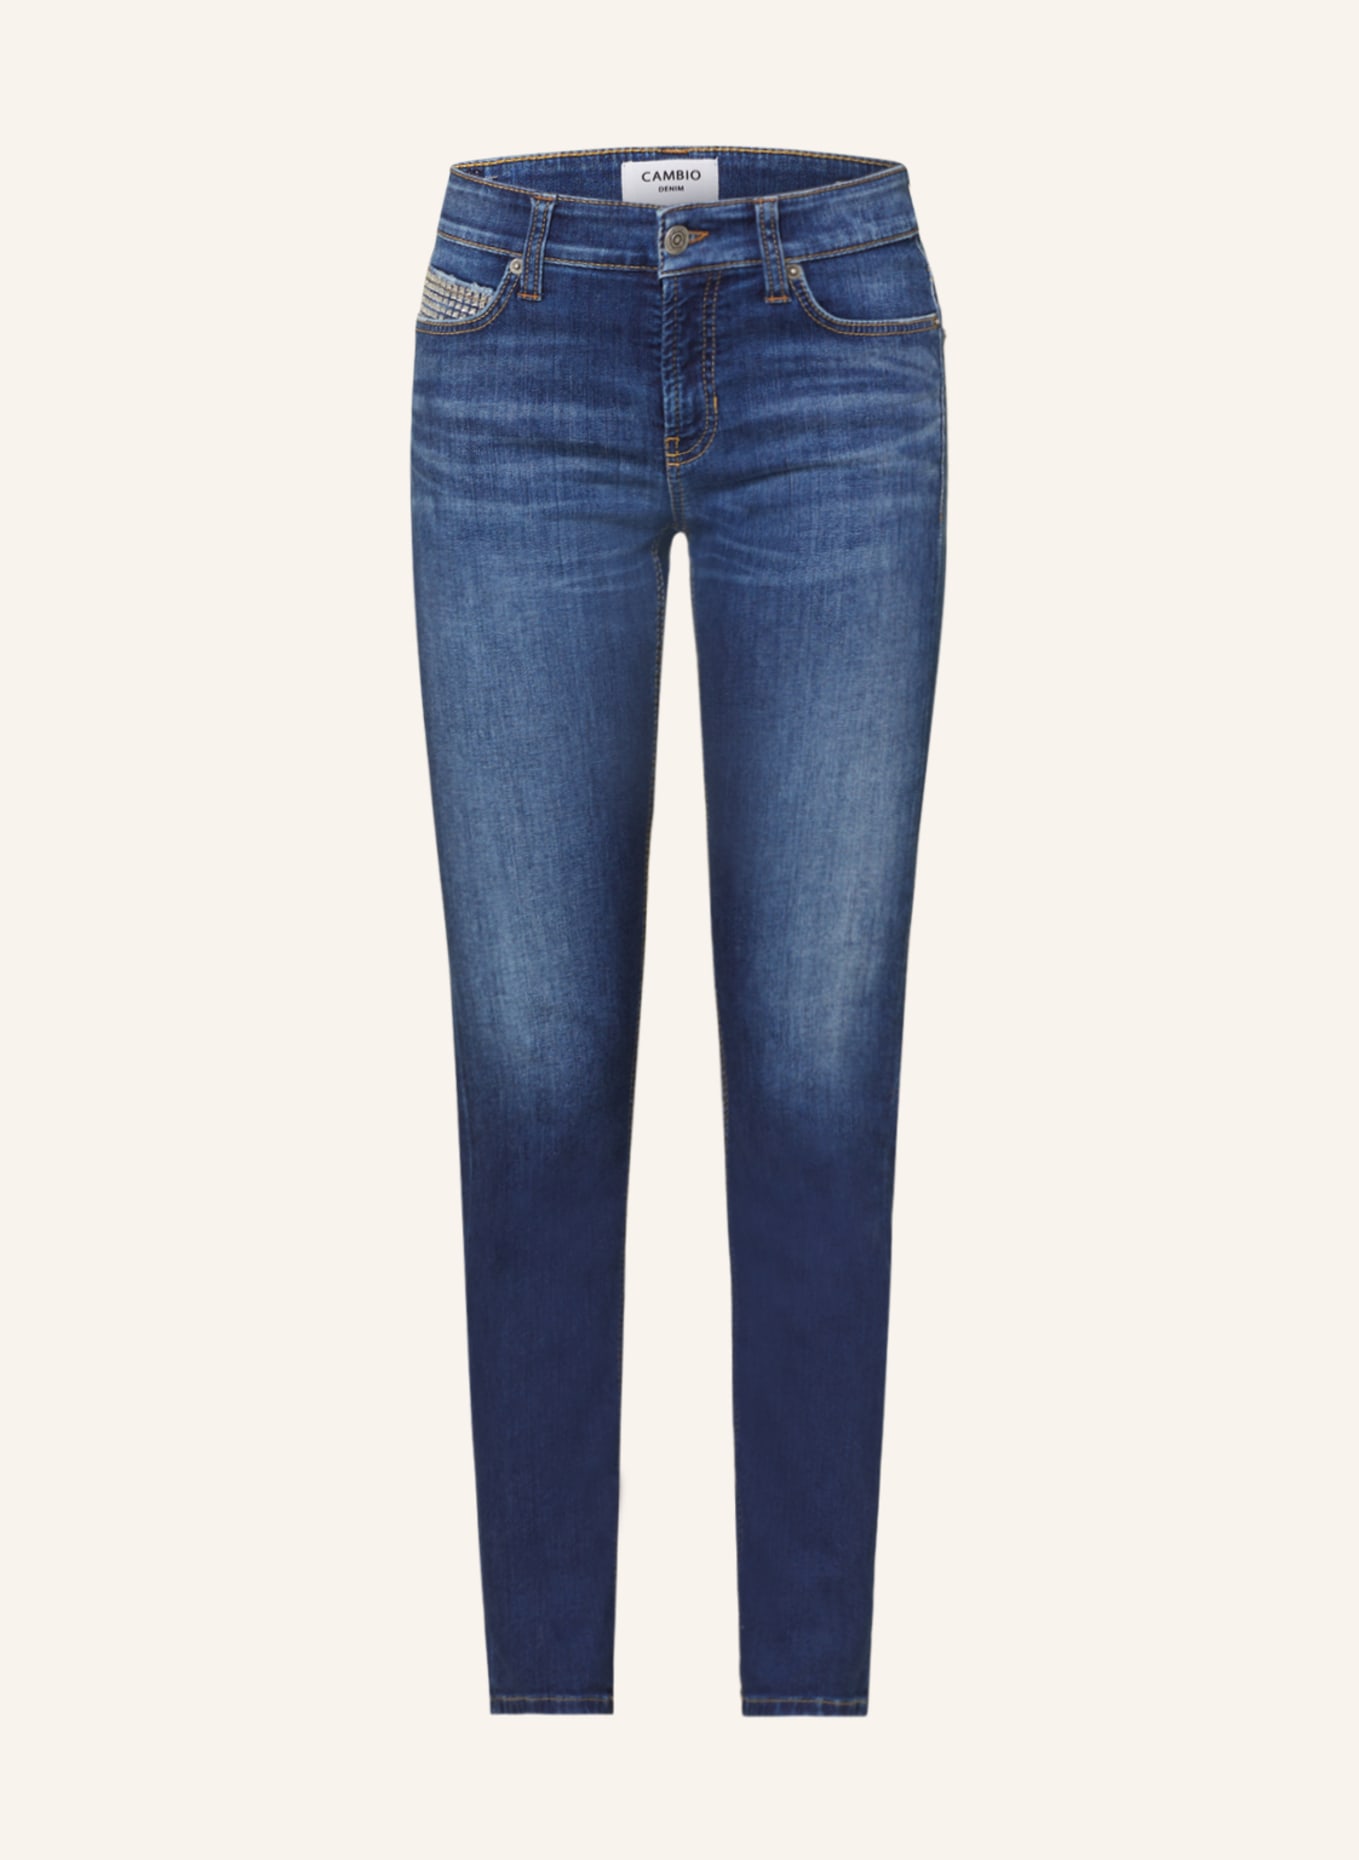 CAMBIO Skinny jeans PARIS with decorative gems, Color: 5061 medium contrast splinted (Image 1)